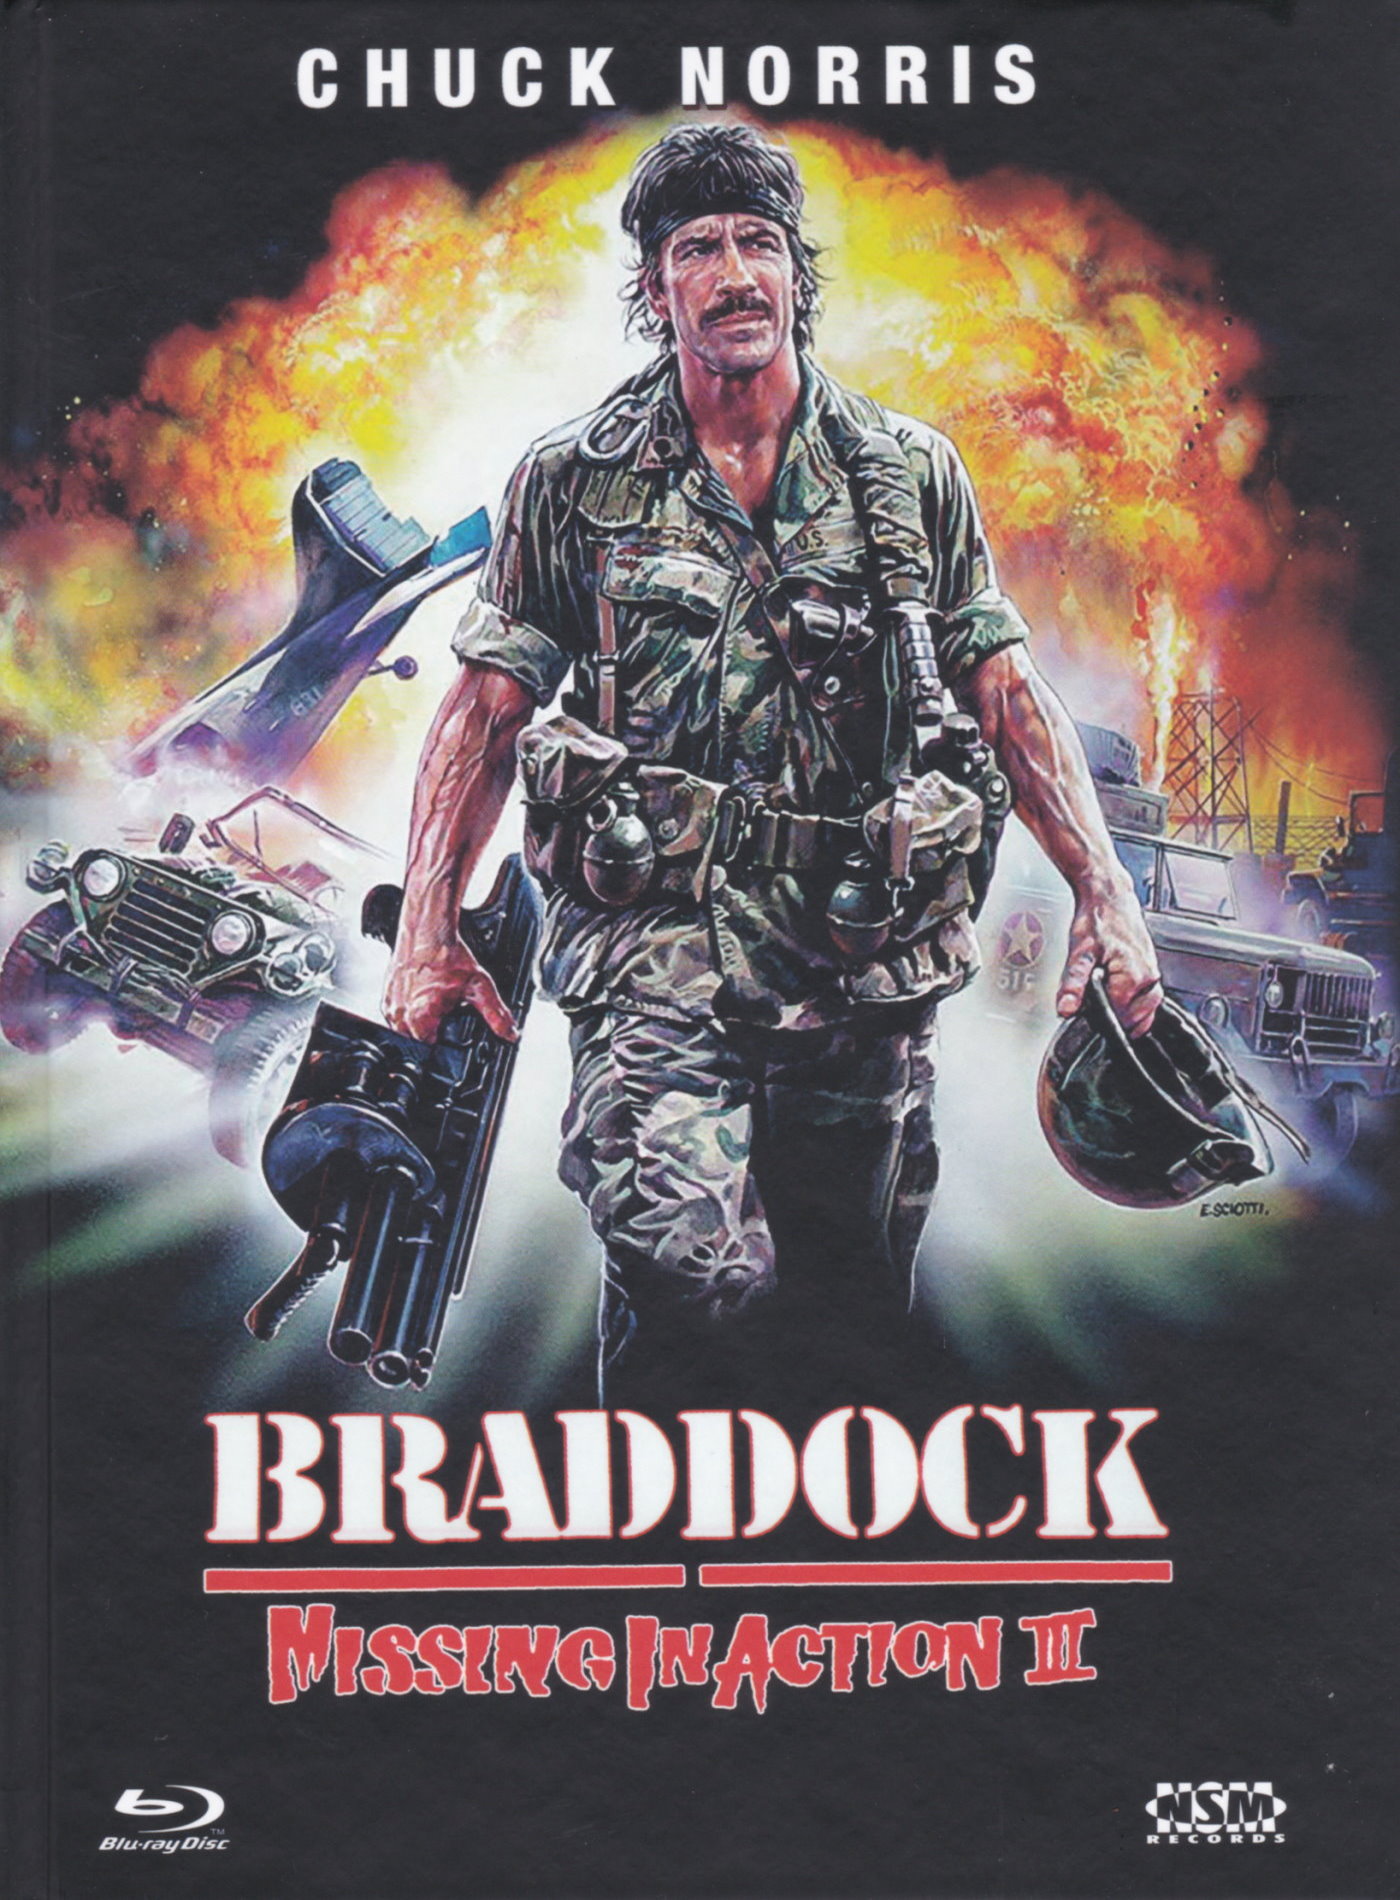 Cover - Braddock - Missing in Action III.jpg